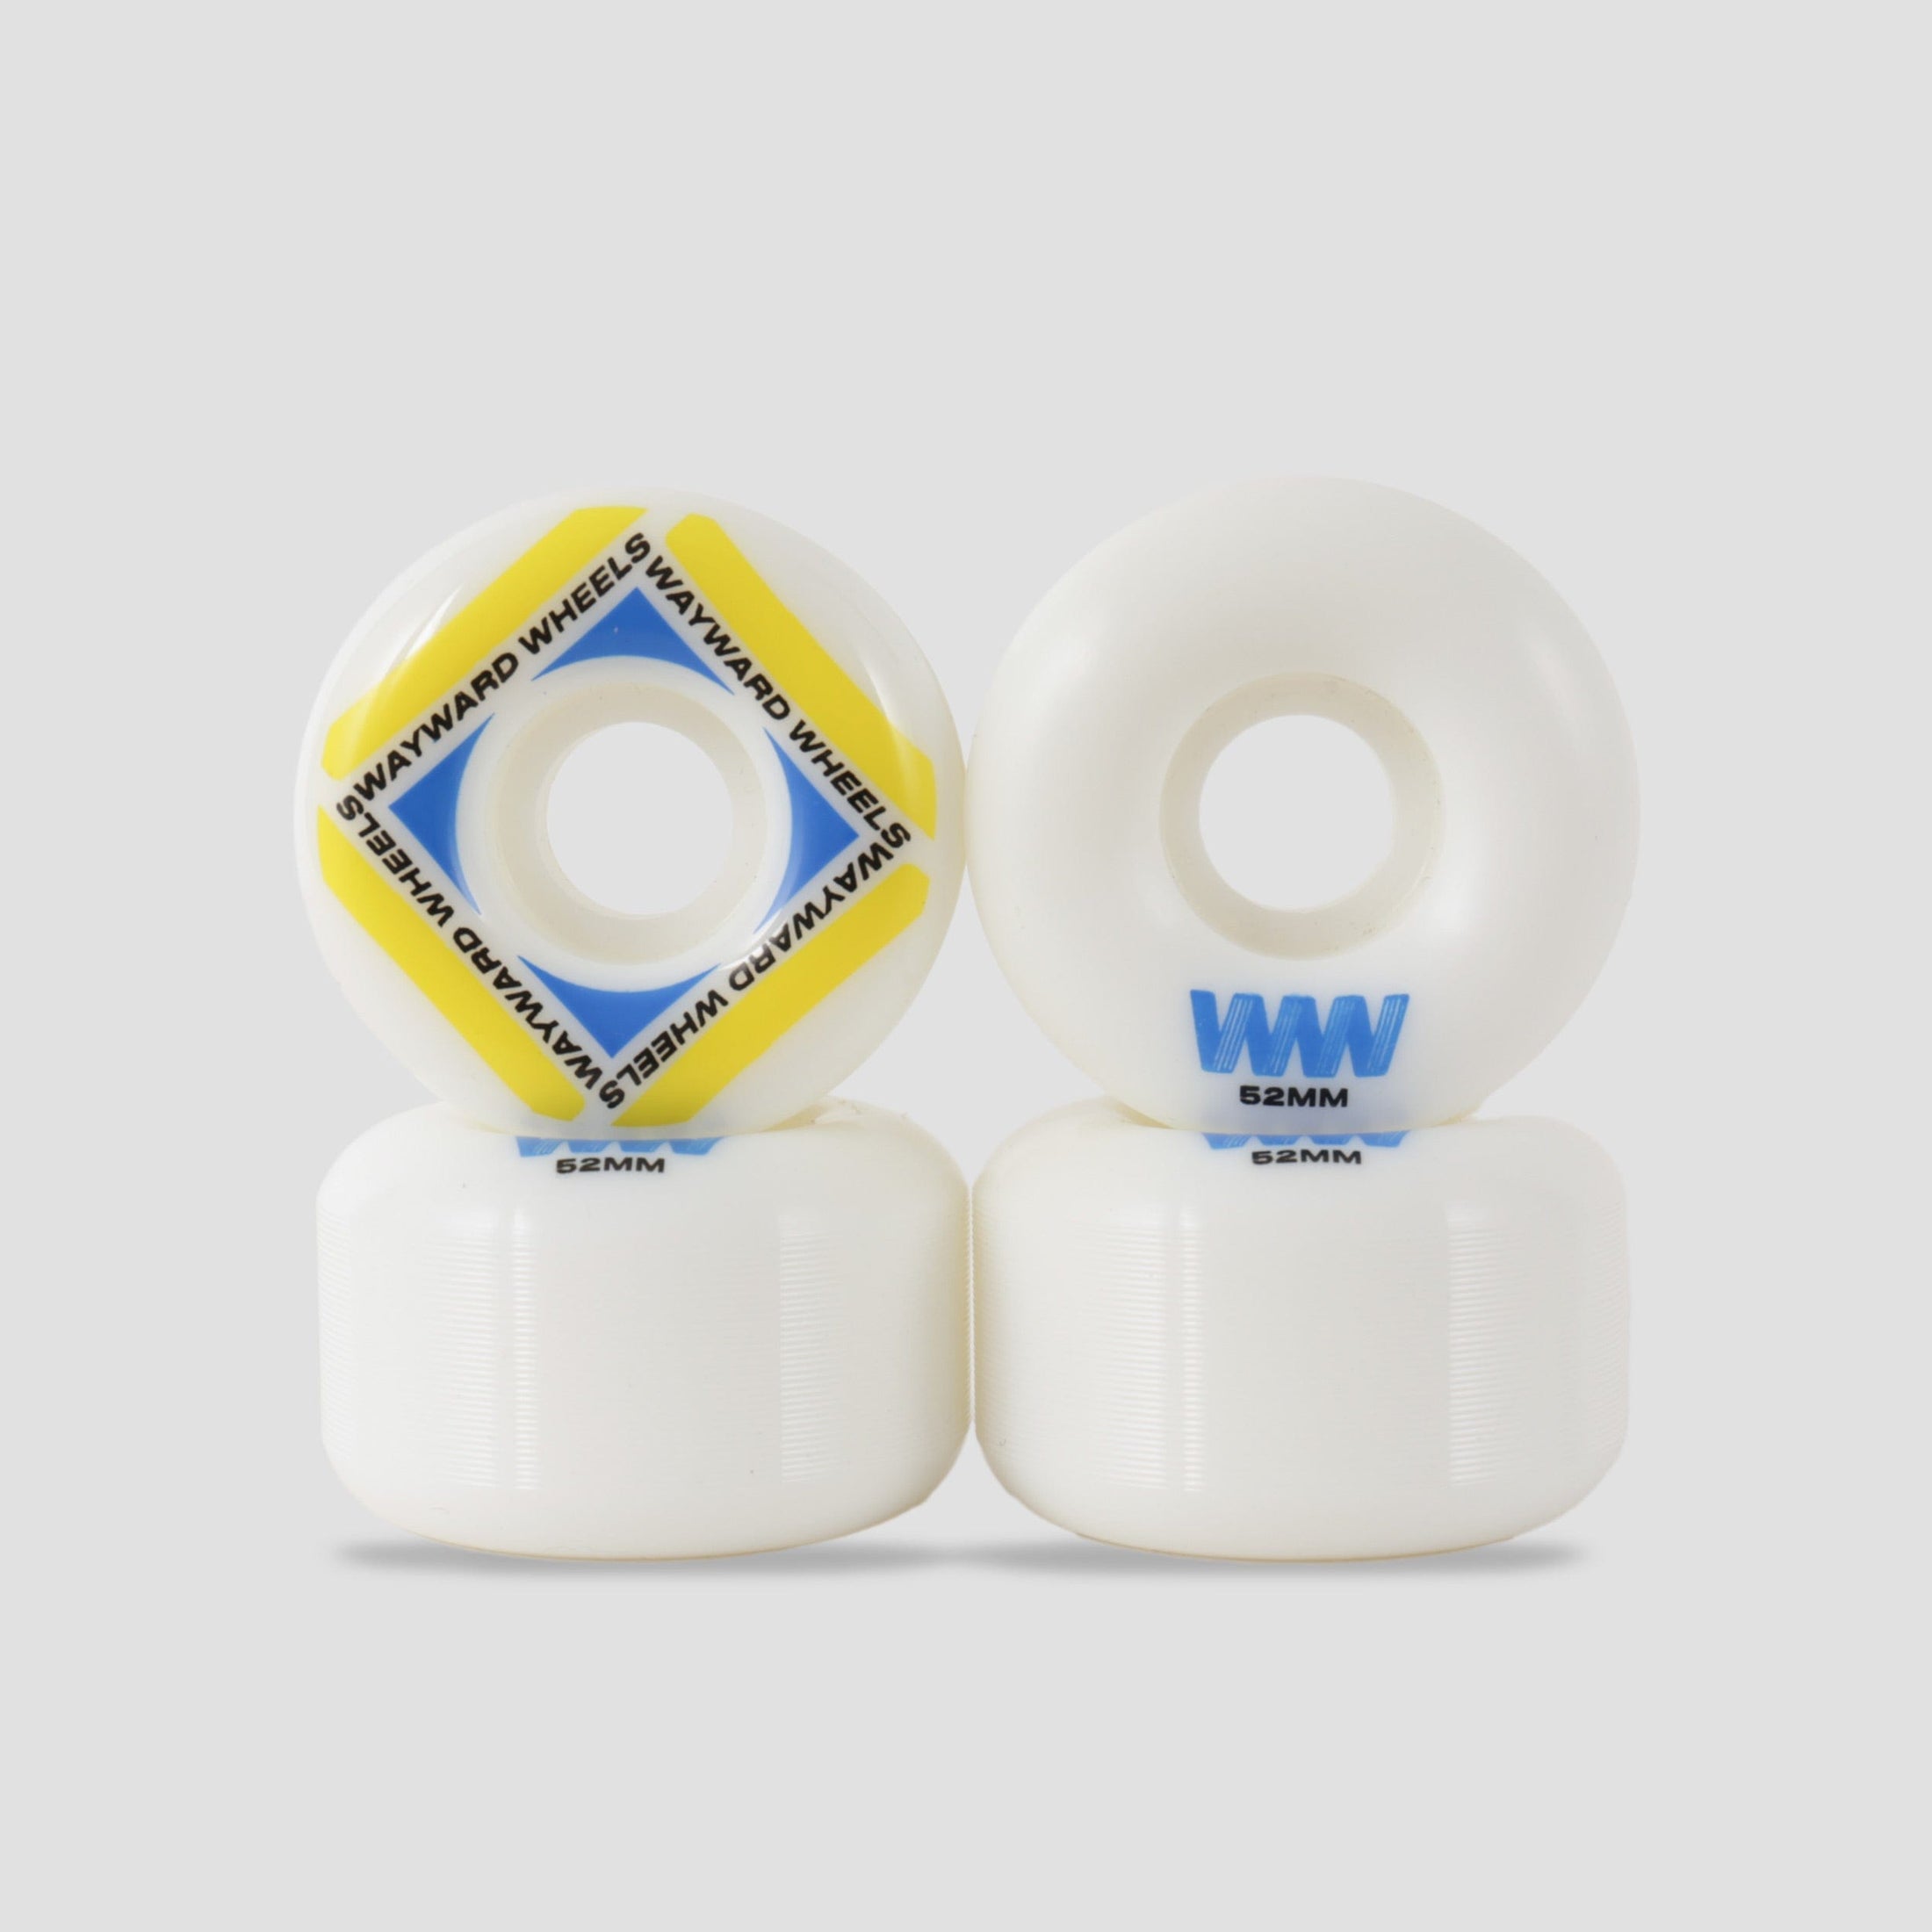 Wayward 52mm Waypoint Wheels White / Yellow / Blue